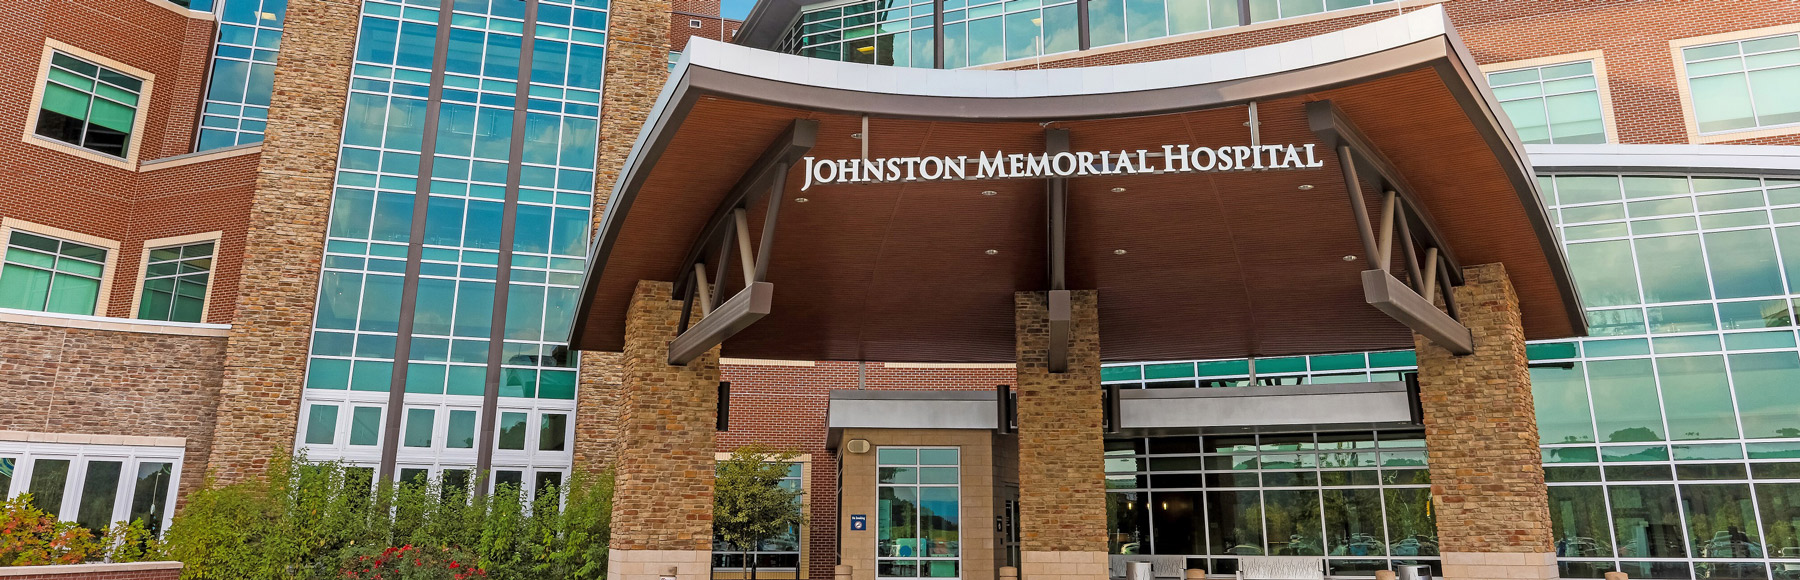 Johnston Memorial Hospital exterior